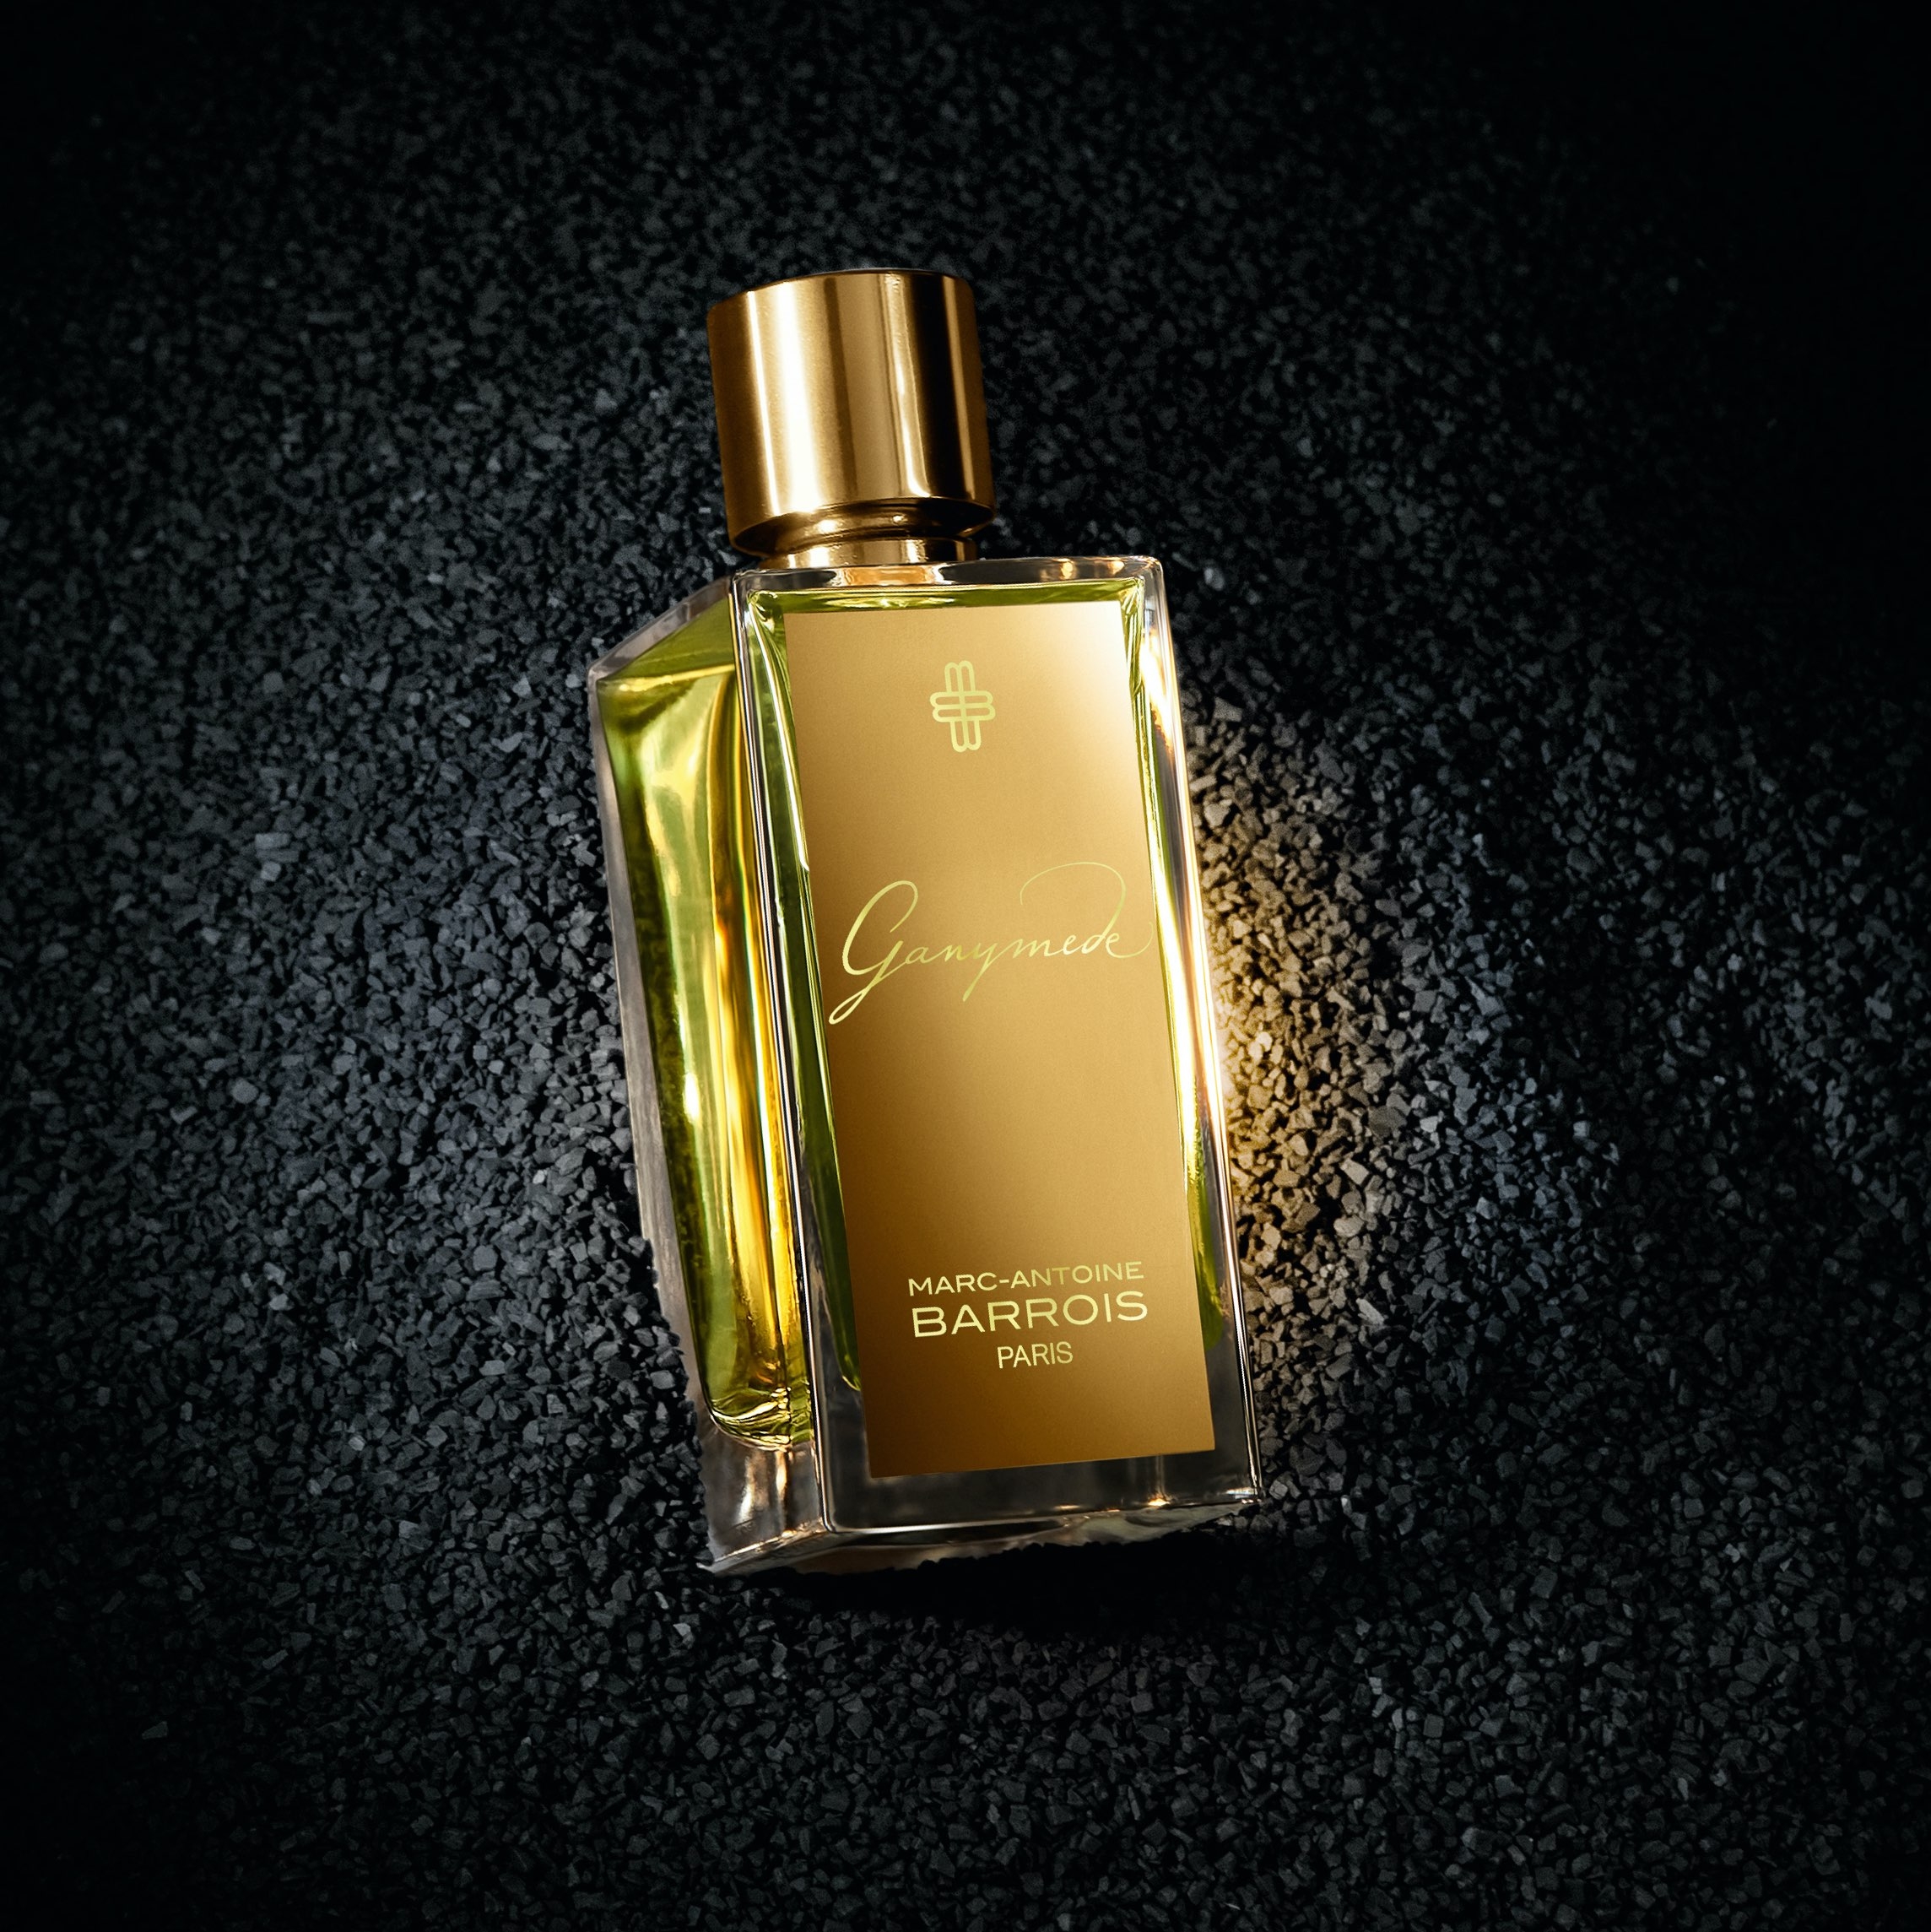 Marc-Antoine Barrois - Ganymede eau de parfum 100 ml ambiance | Perfume Lounge